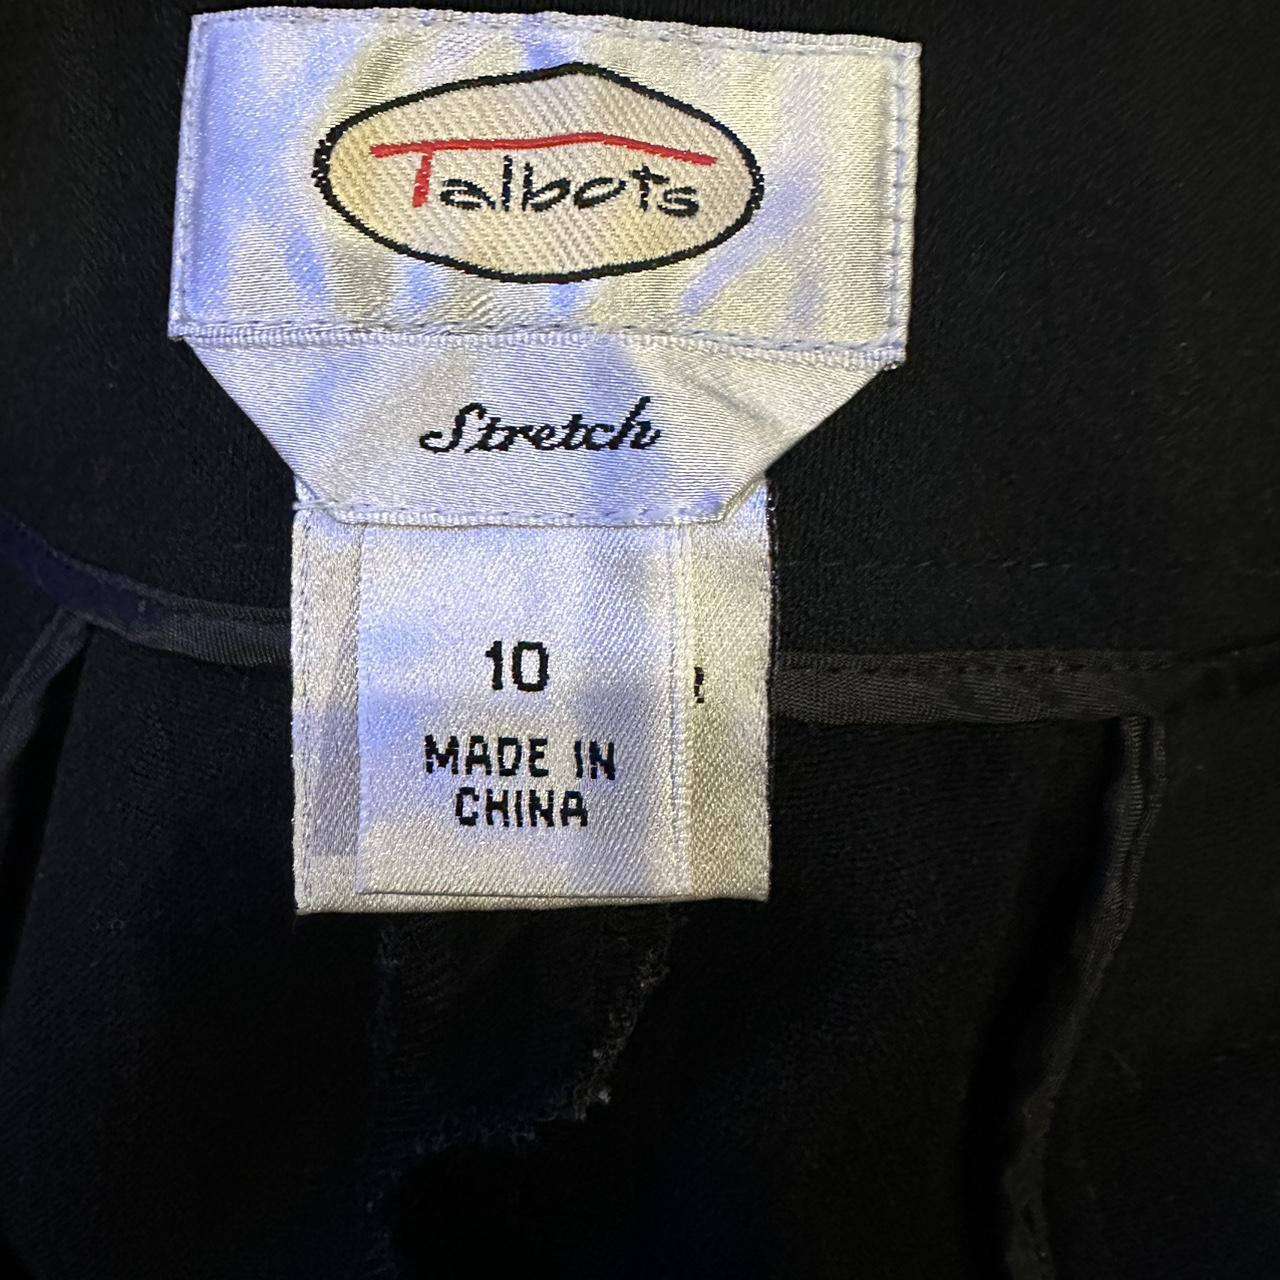 Talbots Women's Black Trousers